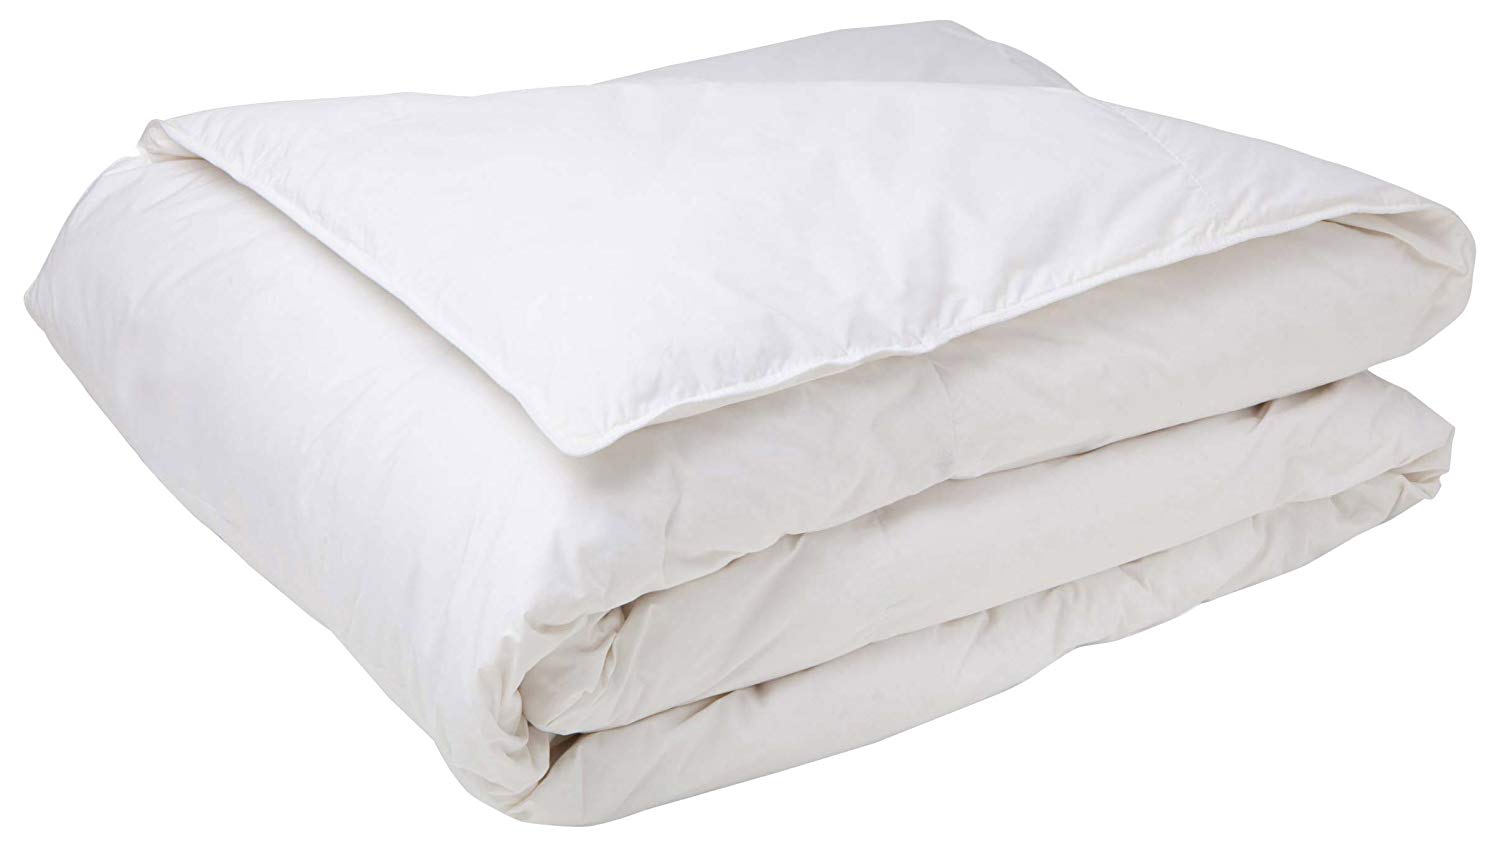 a folded Downlite comforter